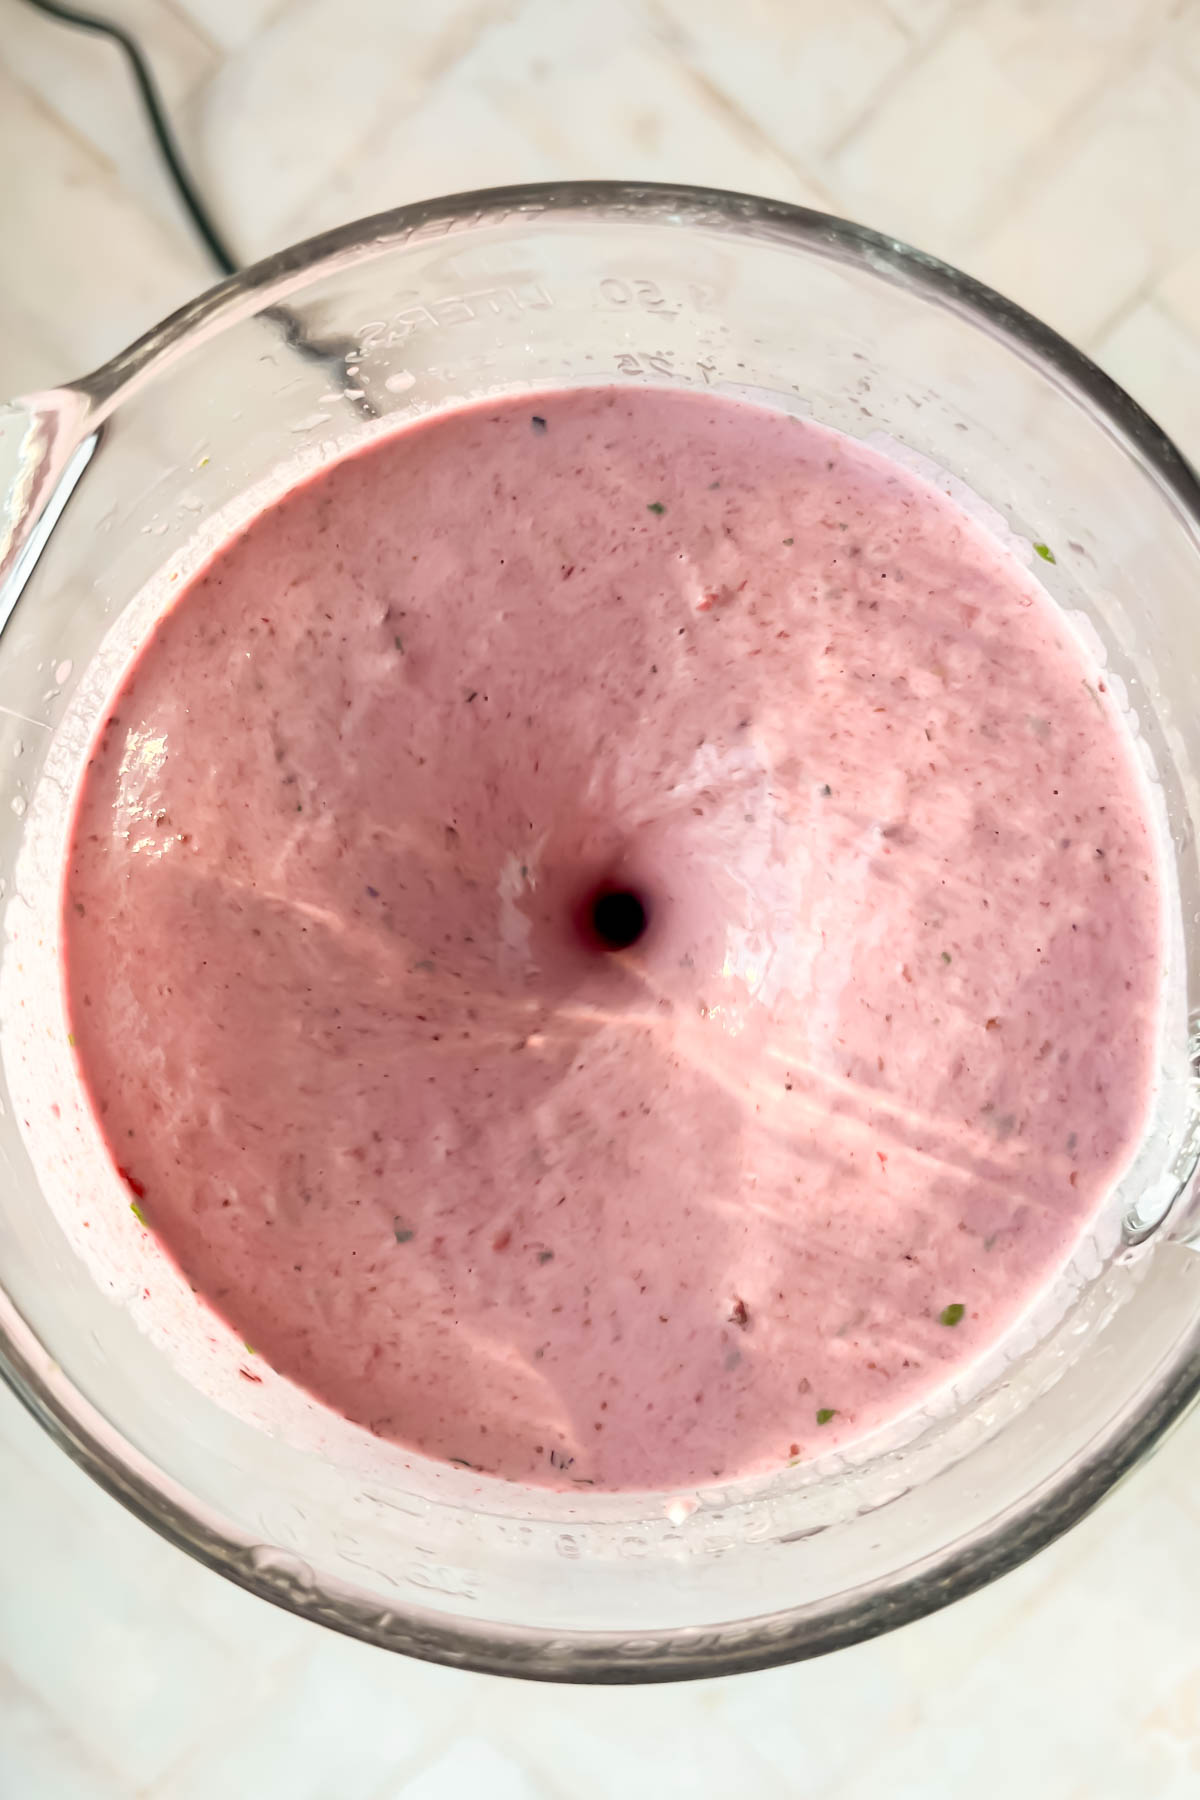 berry smoothie being blended in blender.